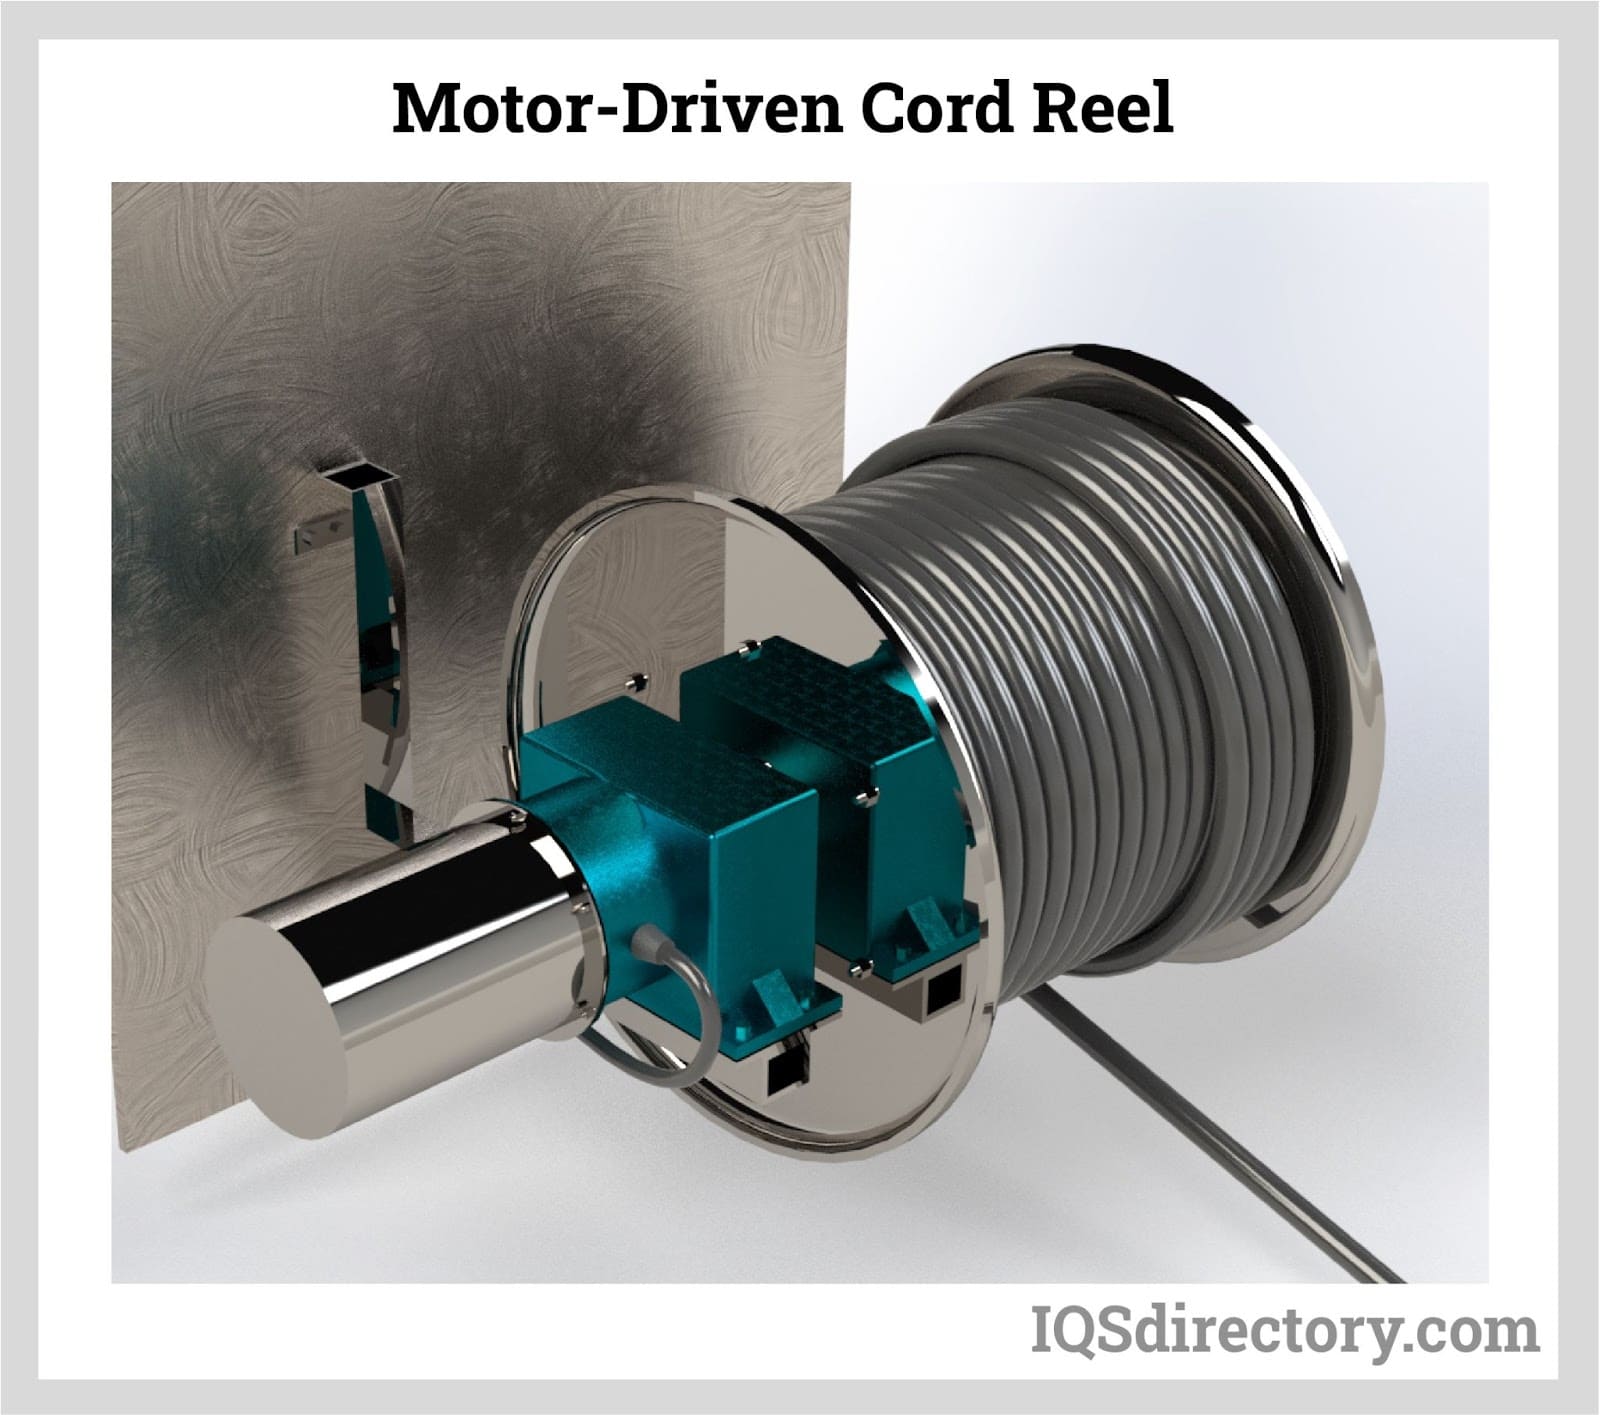 Motor-Driven Cord Reel